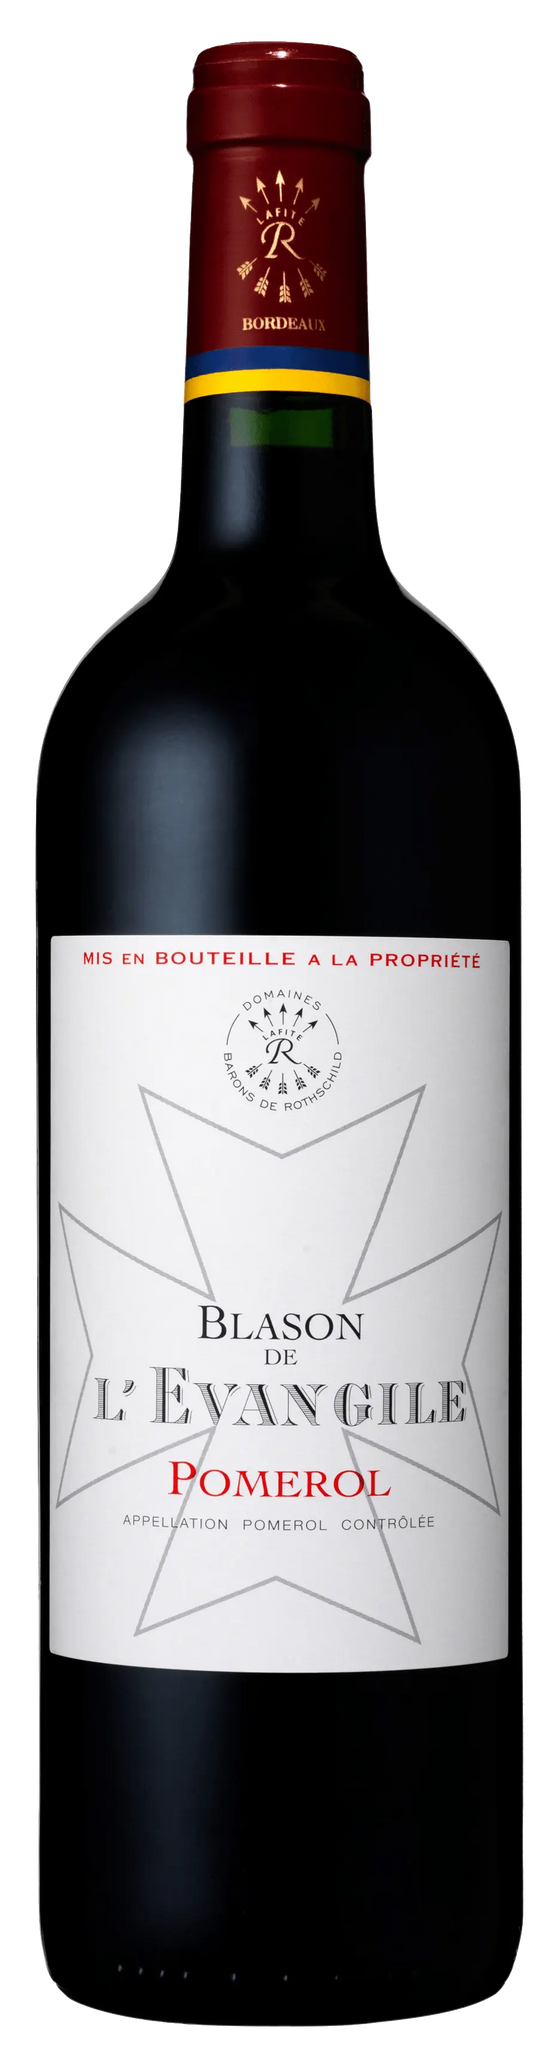 Blason de l'Evangile 2016, Pomerol  (2nd wine of Chateau L'Evangile)  (1x75cl) - TwoMoreGlasses.com